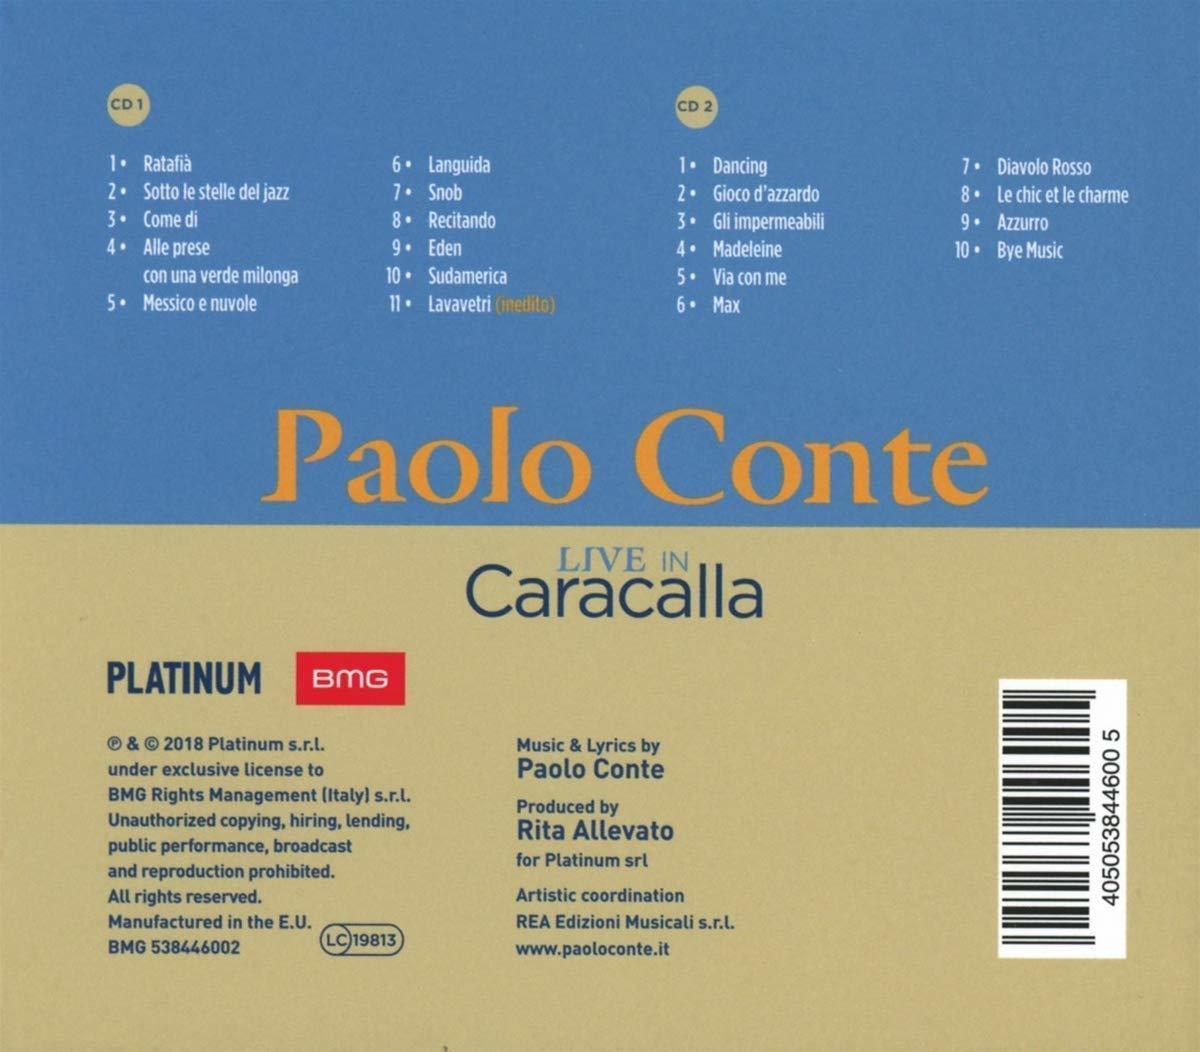 (CD) Years (Live) Azzurro - Live Paolo Conte Caracalla-50 - Of in